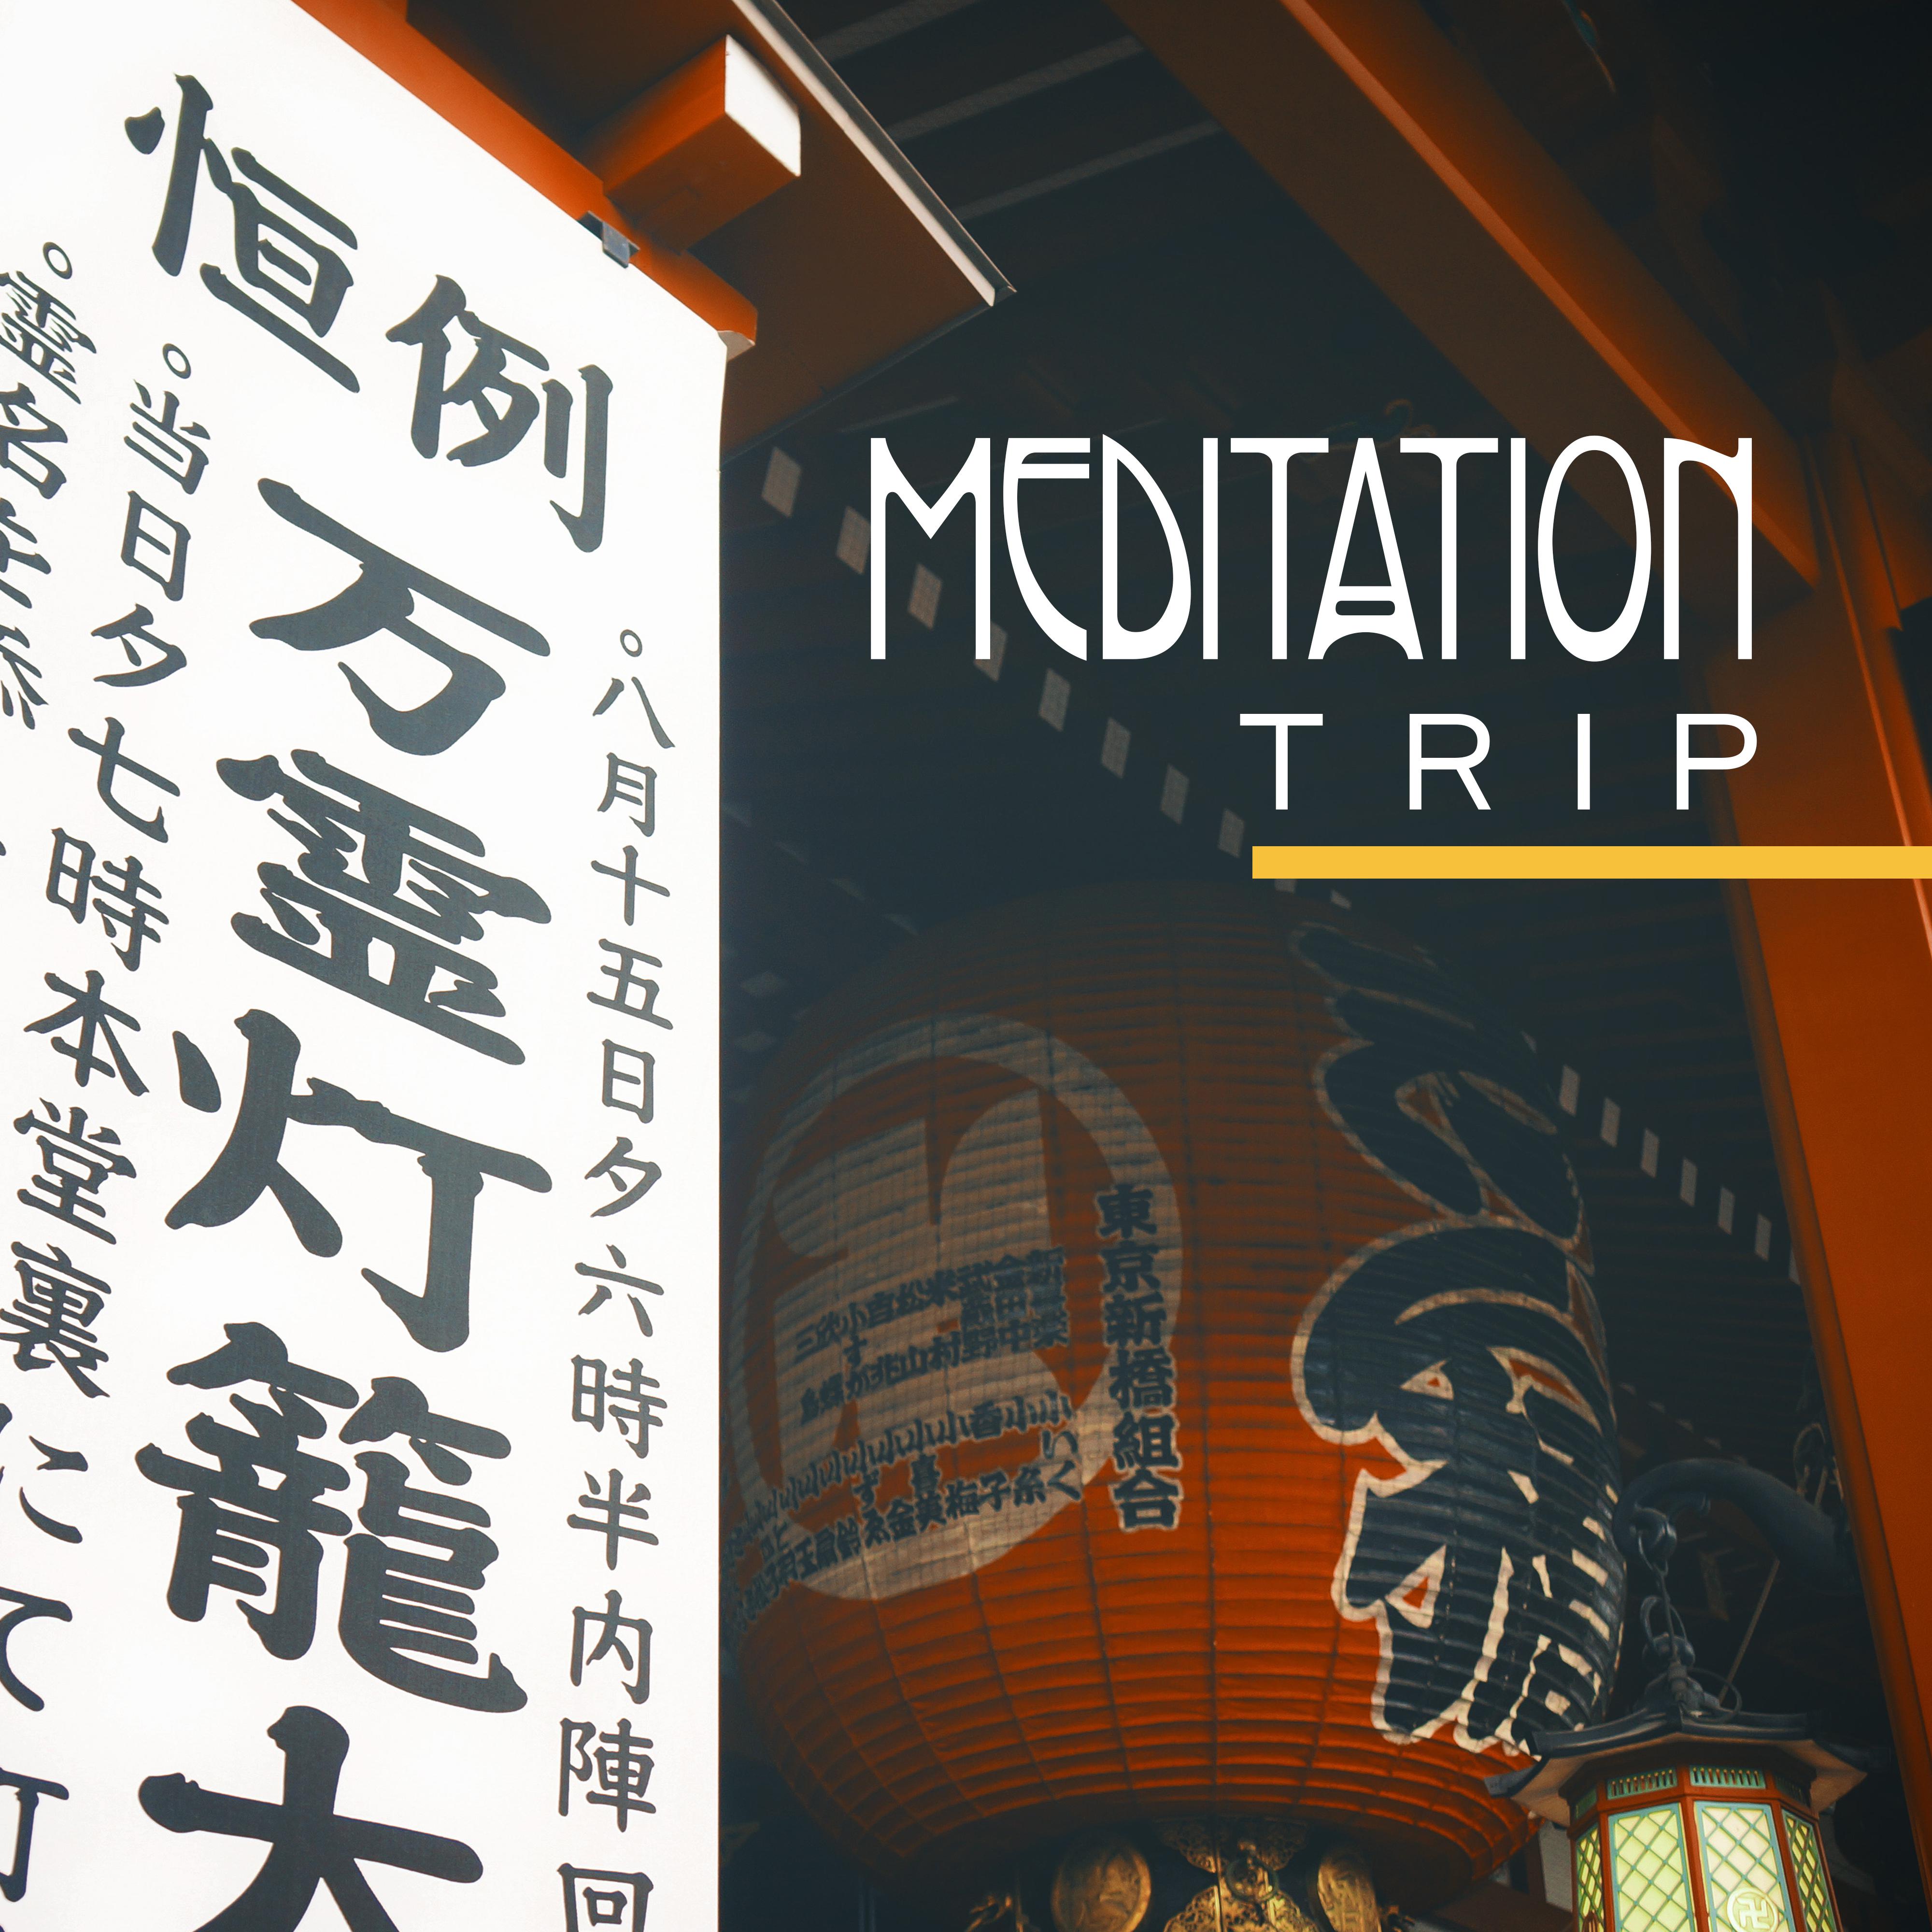 Meditation Trip – Healing Music for Yoga, Meditation Music, Zen, Massage, New Age 2017